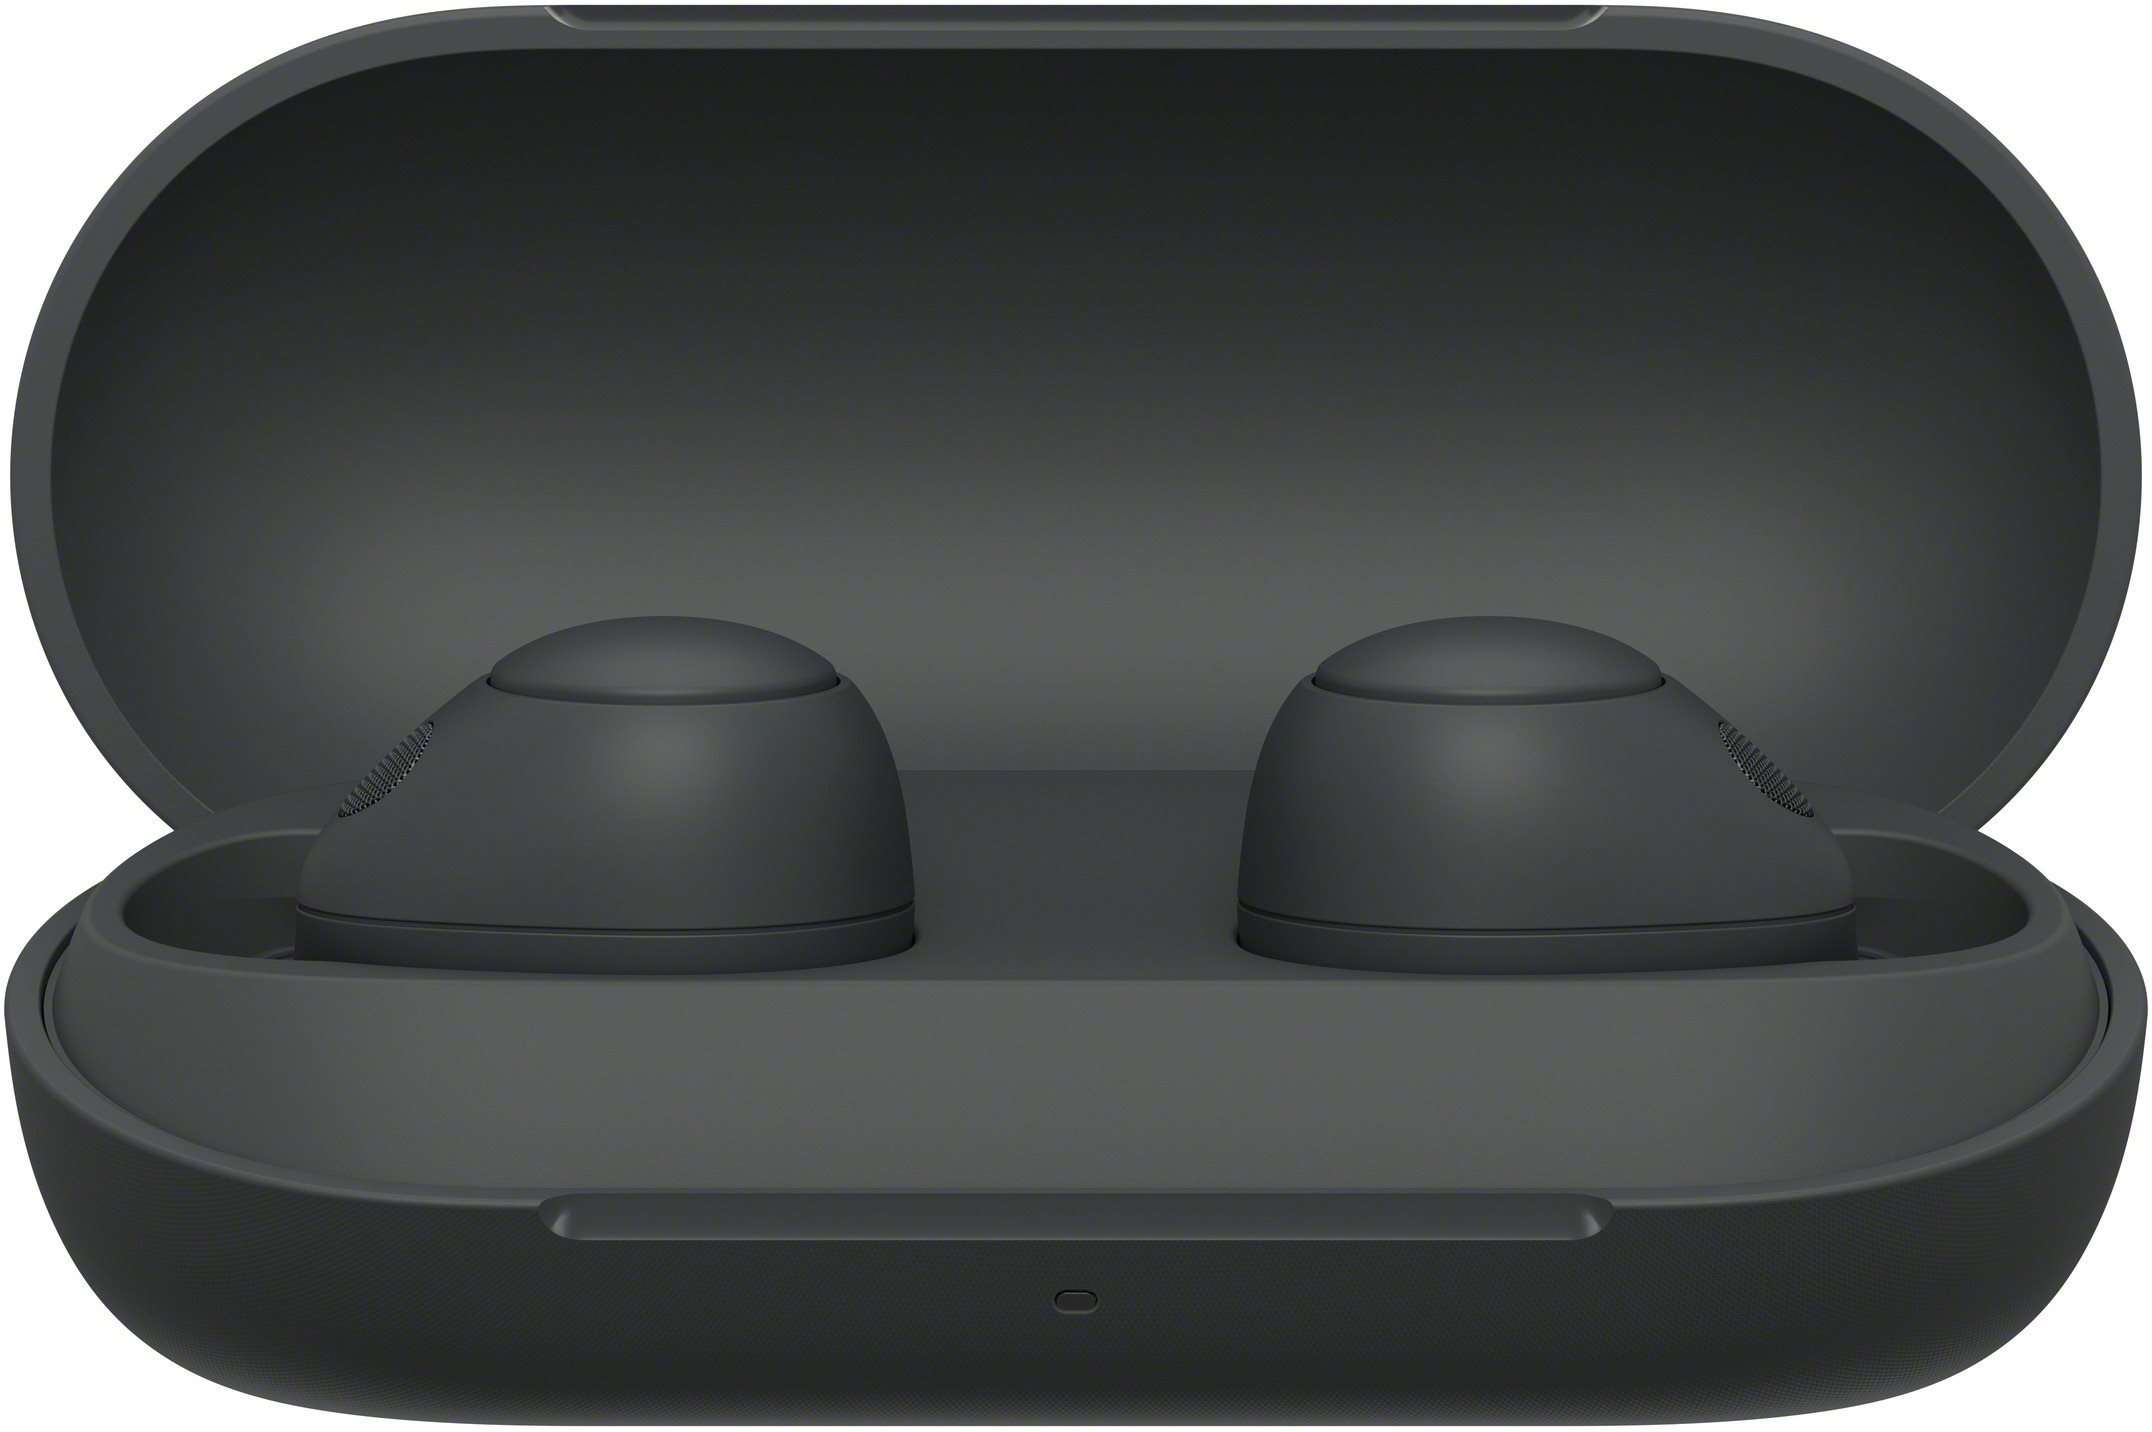 Sony bezdrátová sluchátka WF-C700N,  EU,  černá1 